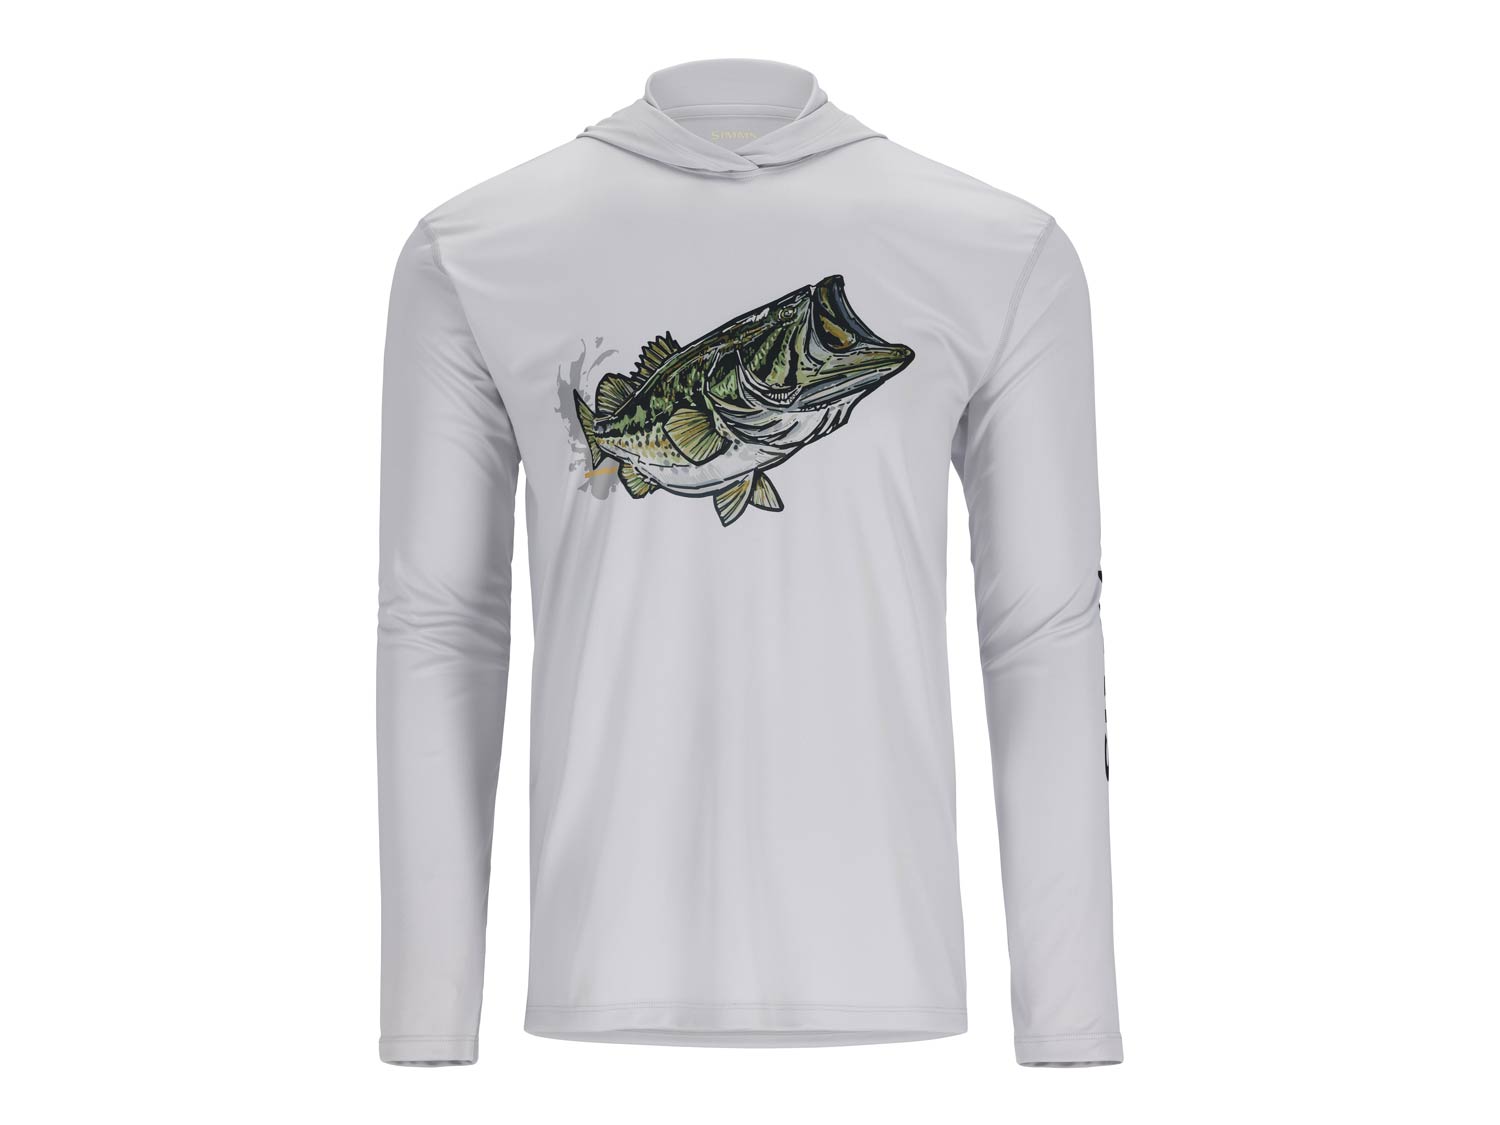  Simms Fishing Shirts